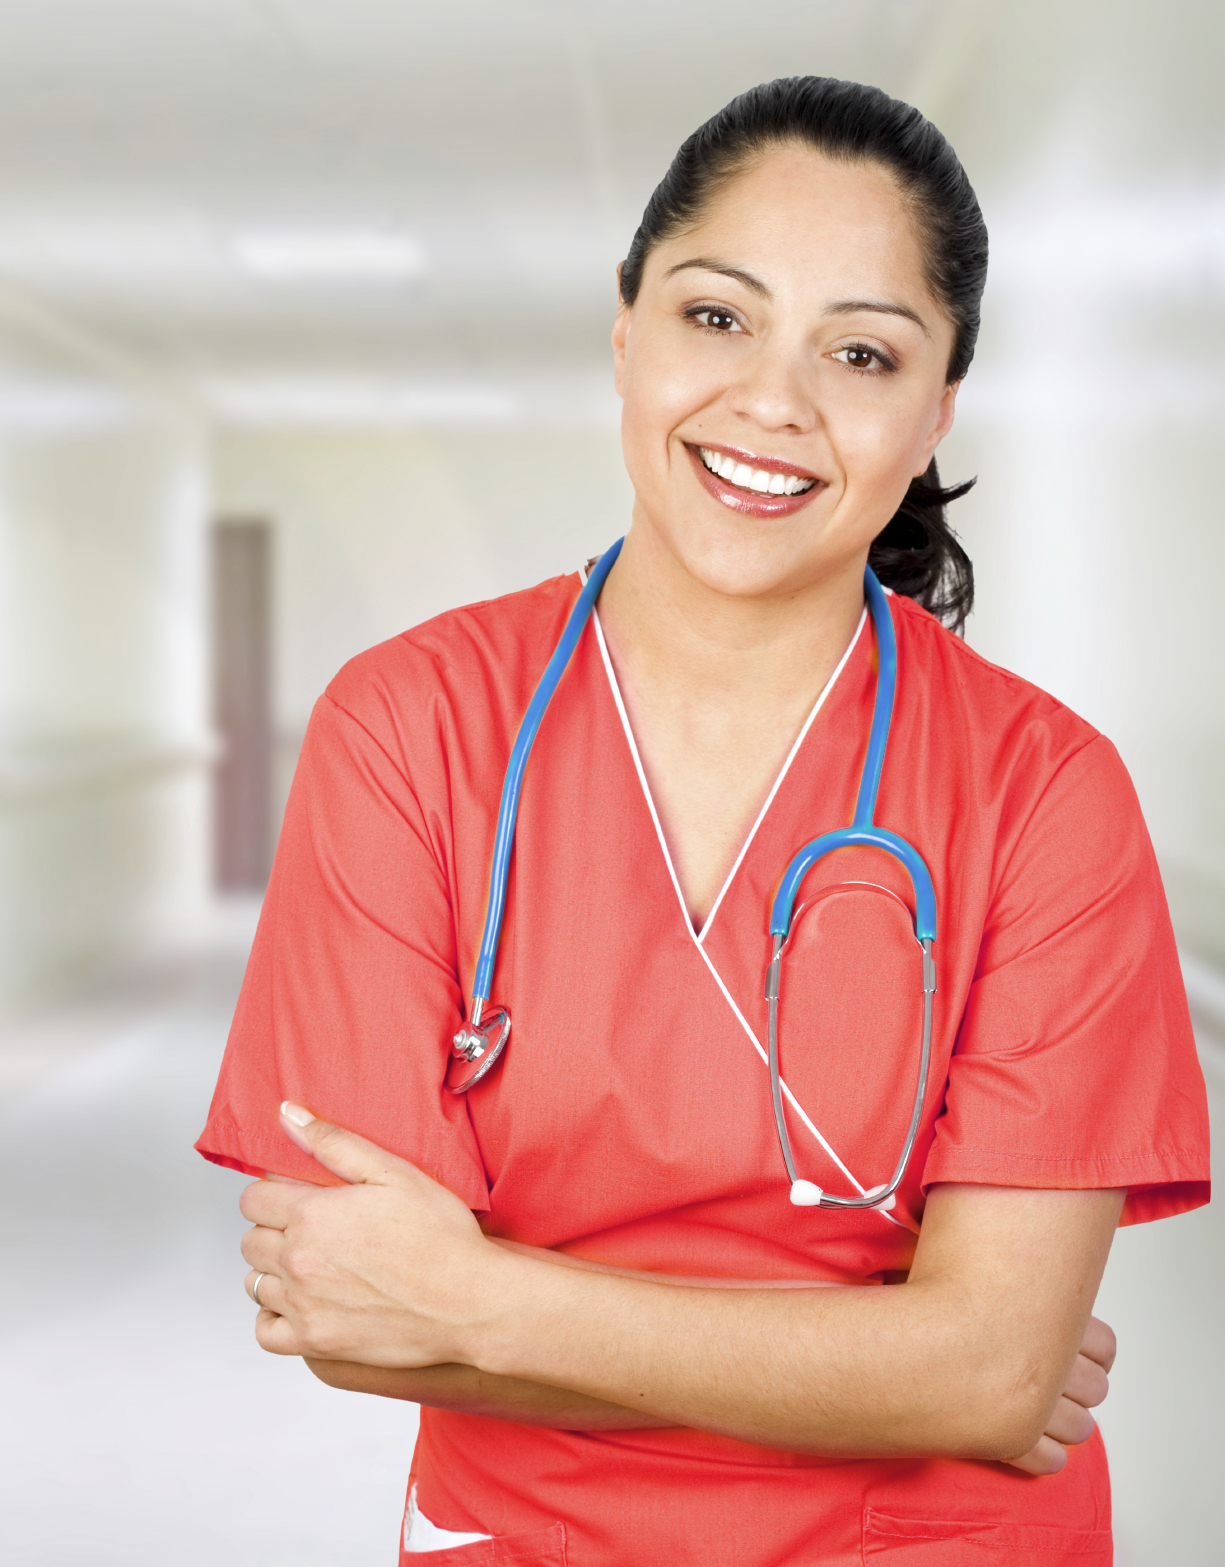 Smiling Hispanic Woman Doctor. 